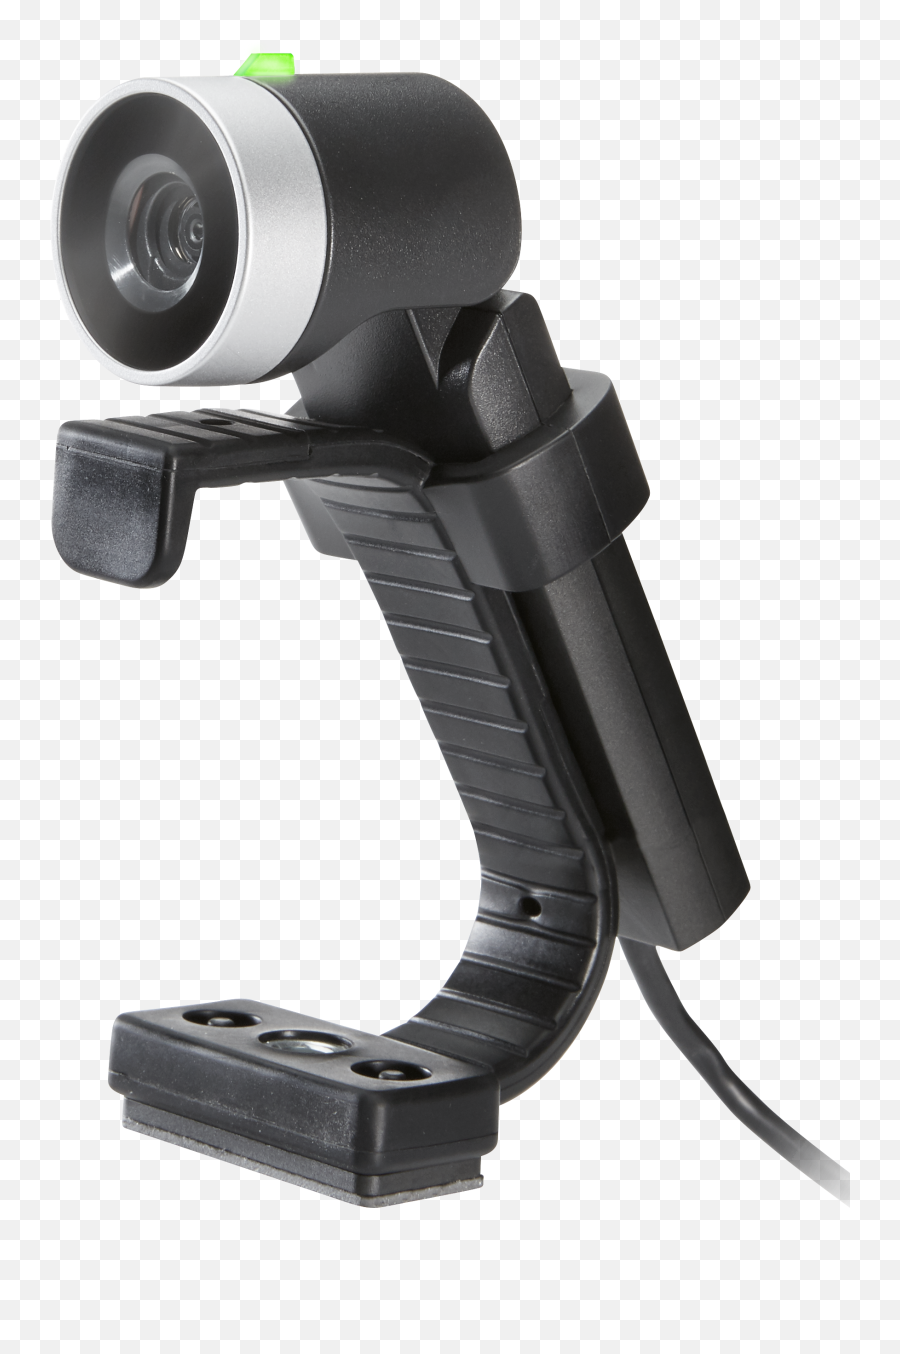 Eagleeye Mini - Hd Videoconferencing Camera Poly Poly Eagleeye Mini Emoji,Eagle Emoticon Ipad